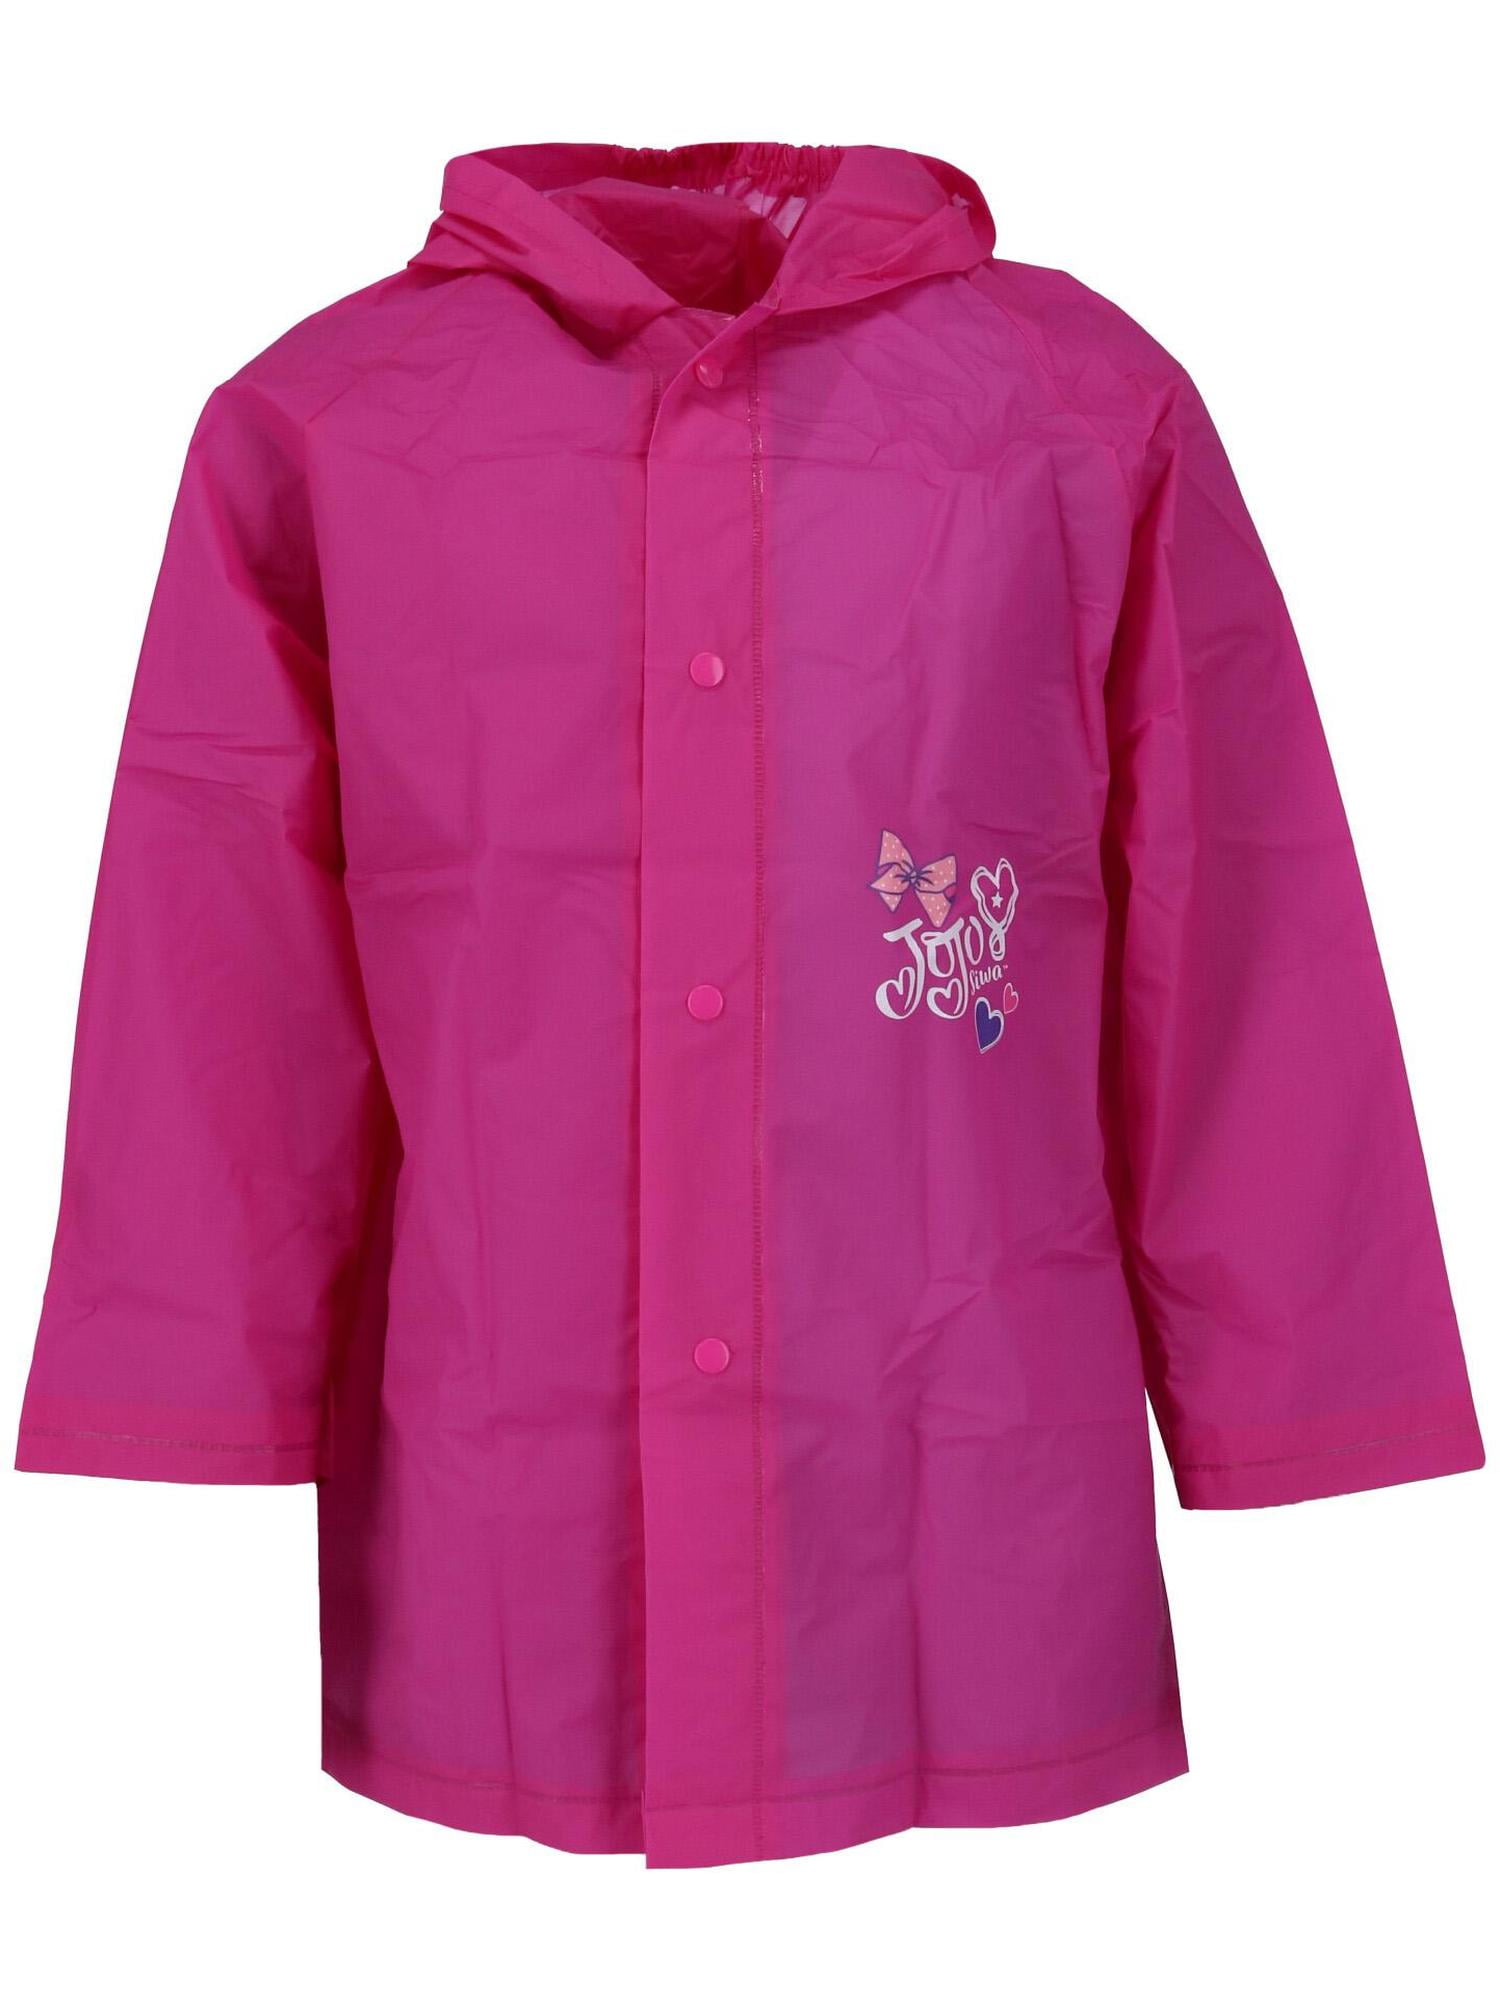 Girls Clear Raincoat Shower Resistant 100% PVC Waterproof Mac 12 18 2 3 4 5 6 